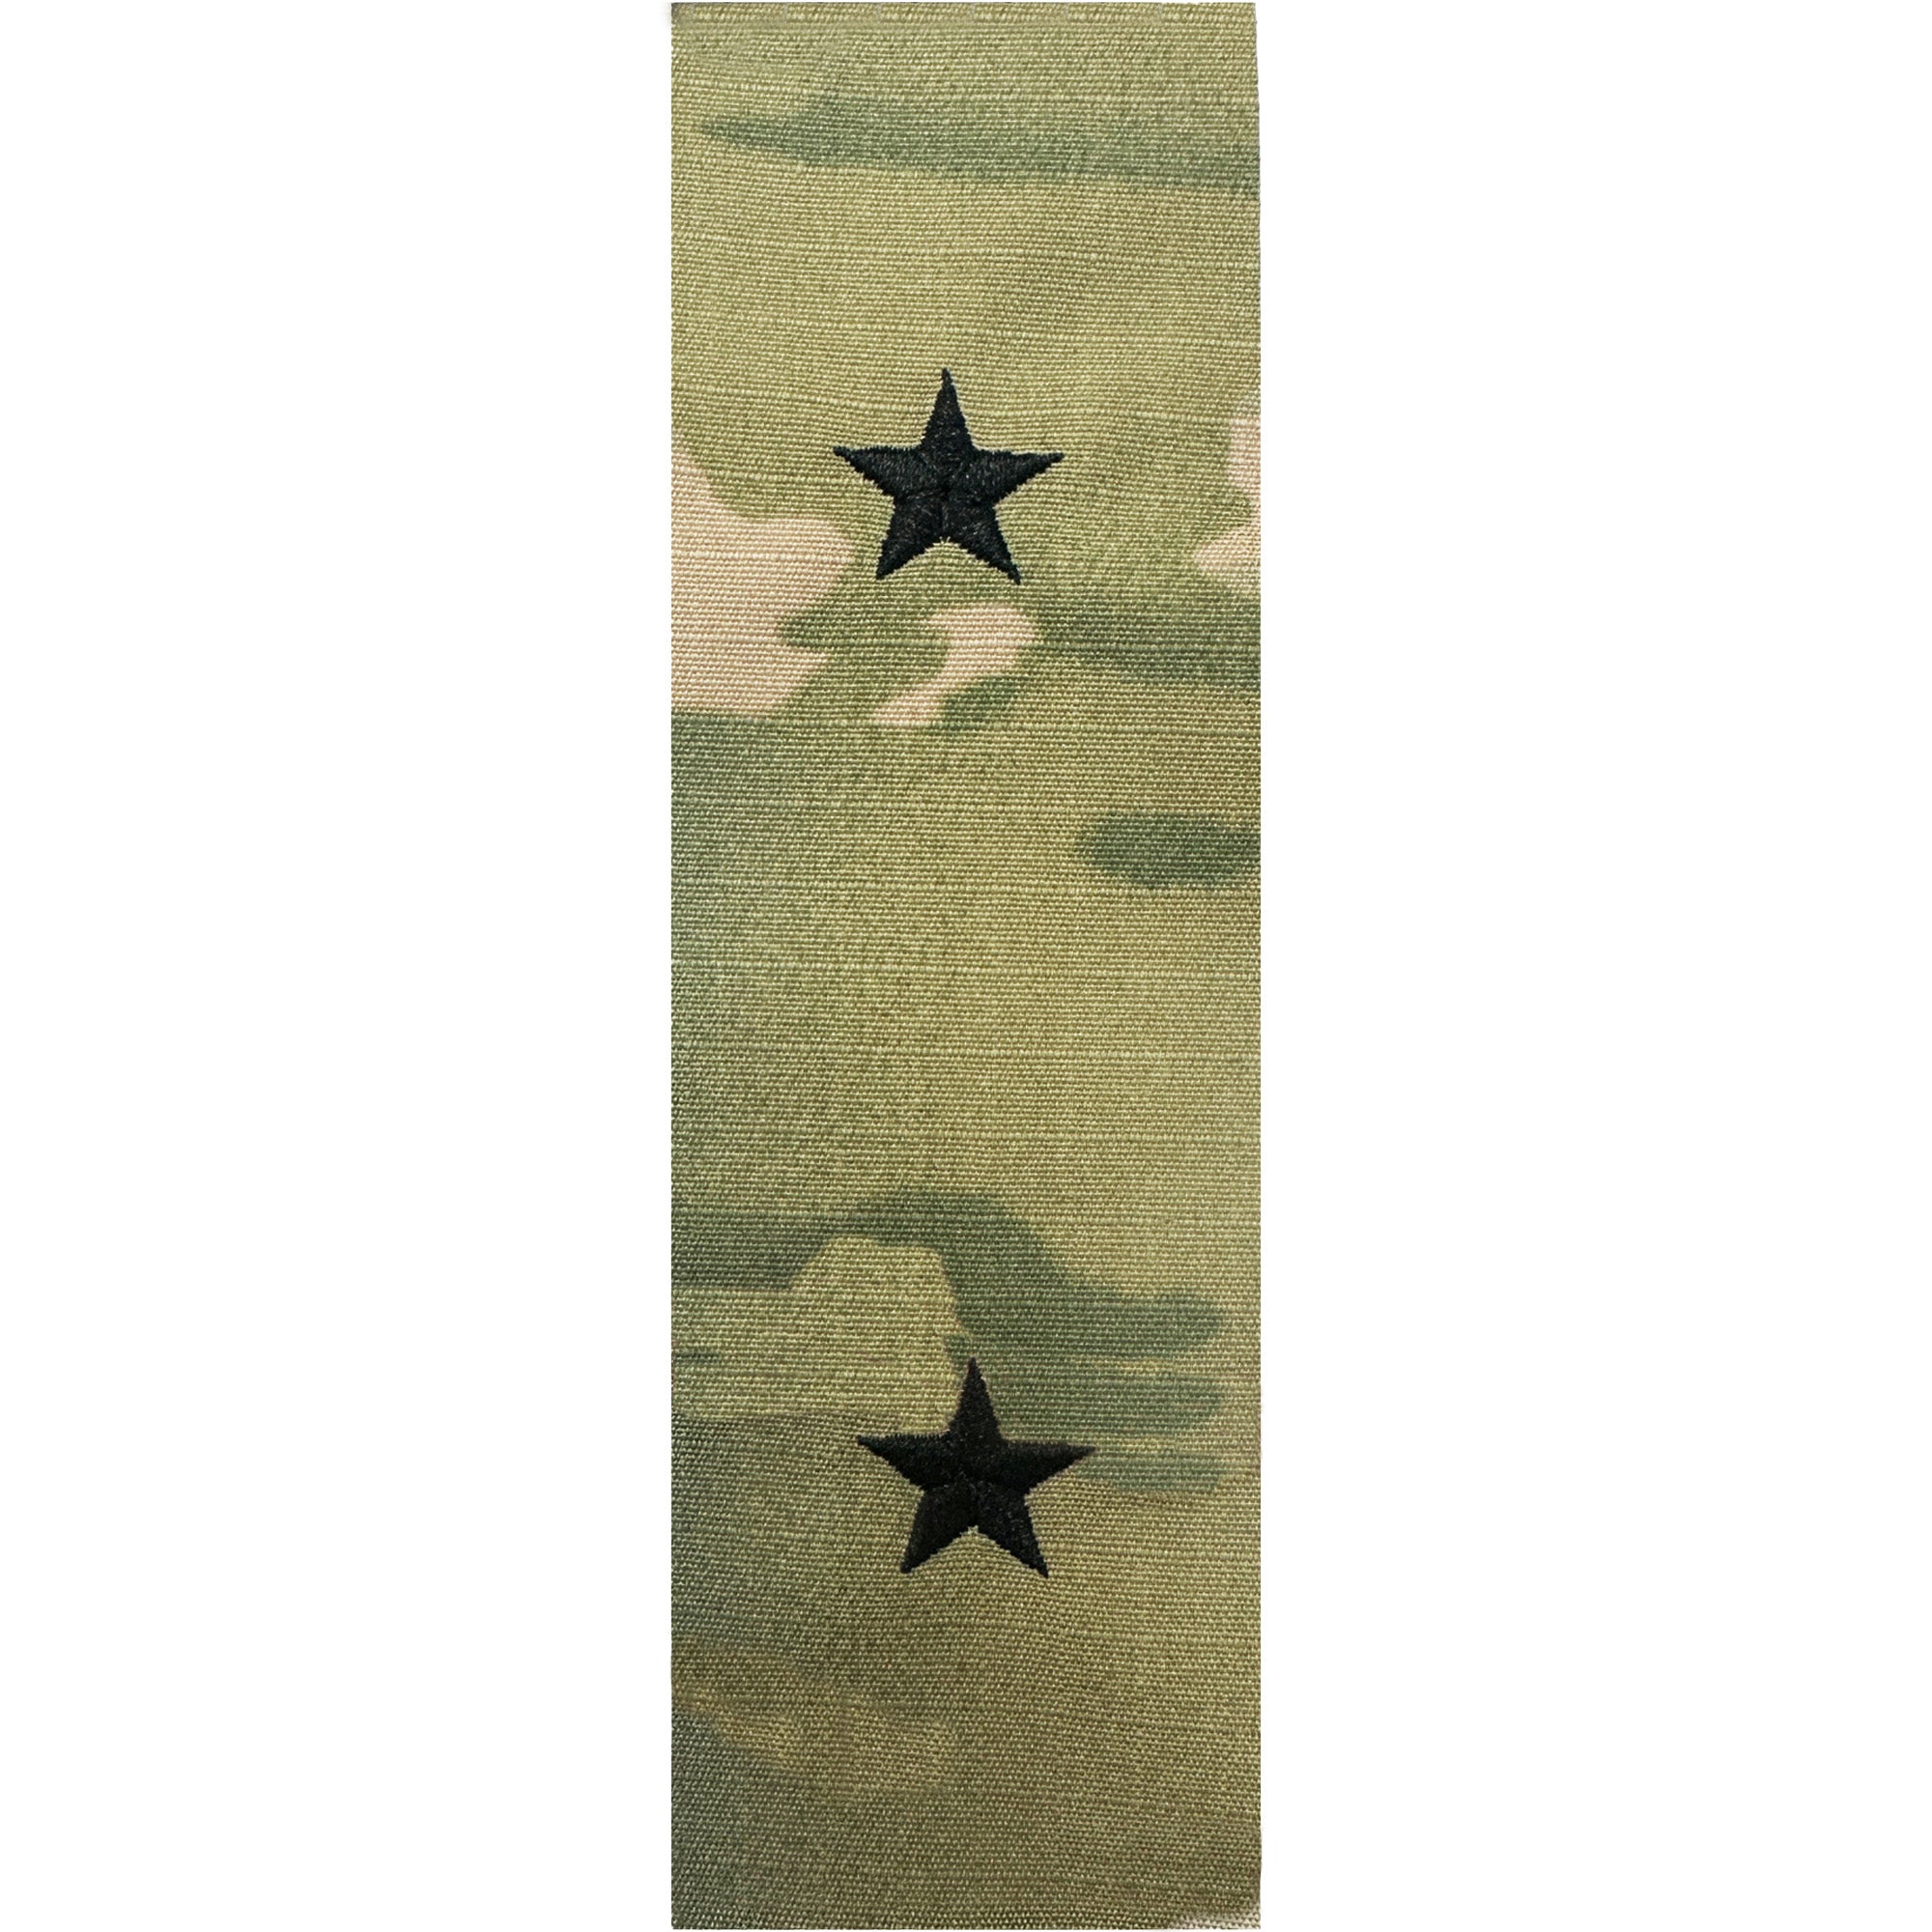 O7 Brigadier General OCP Sew-on for Caps (pair) - Insignia Depot